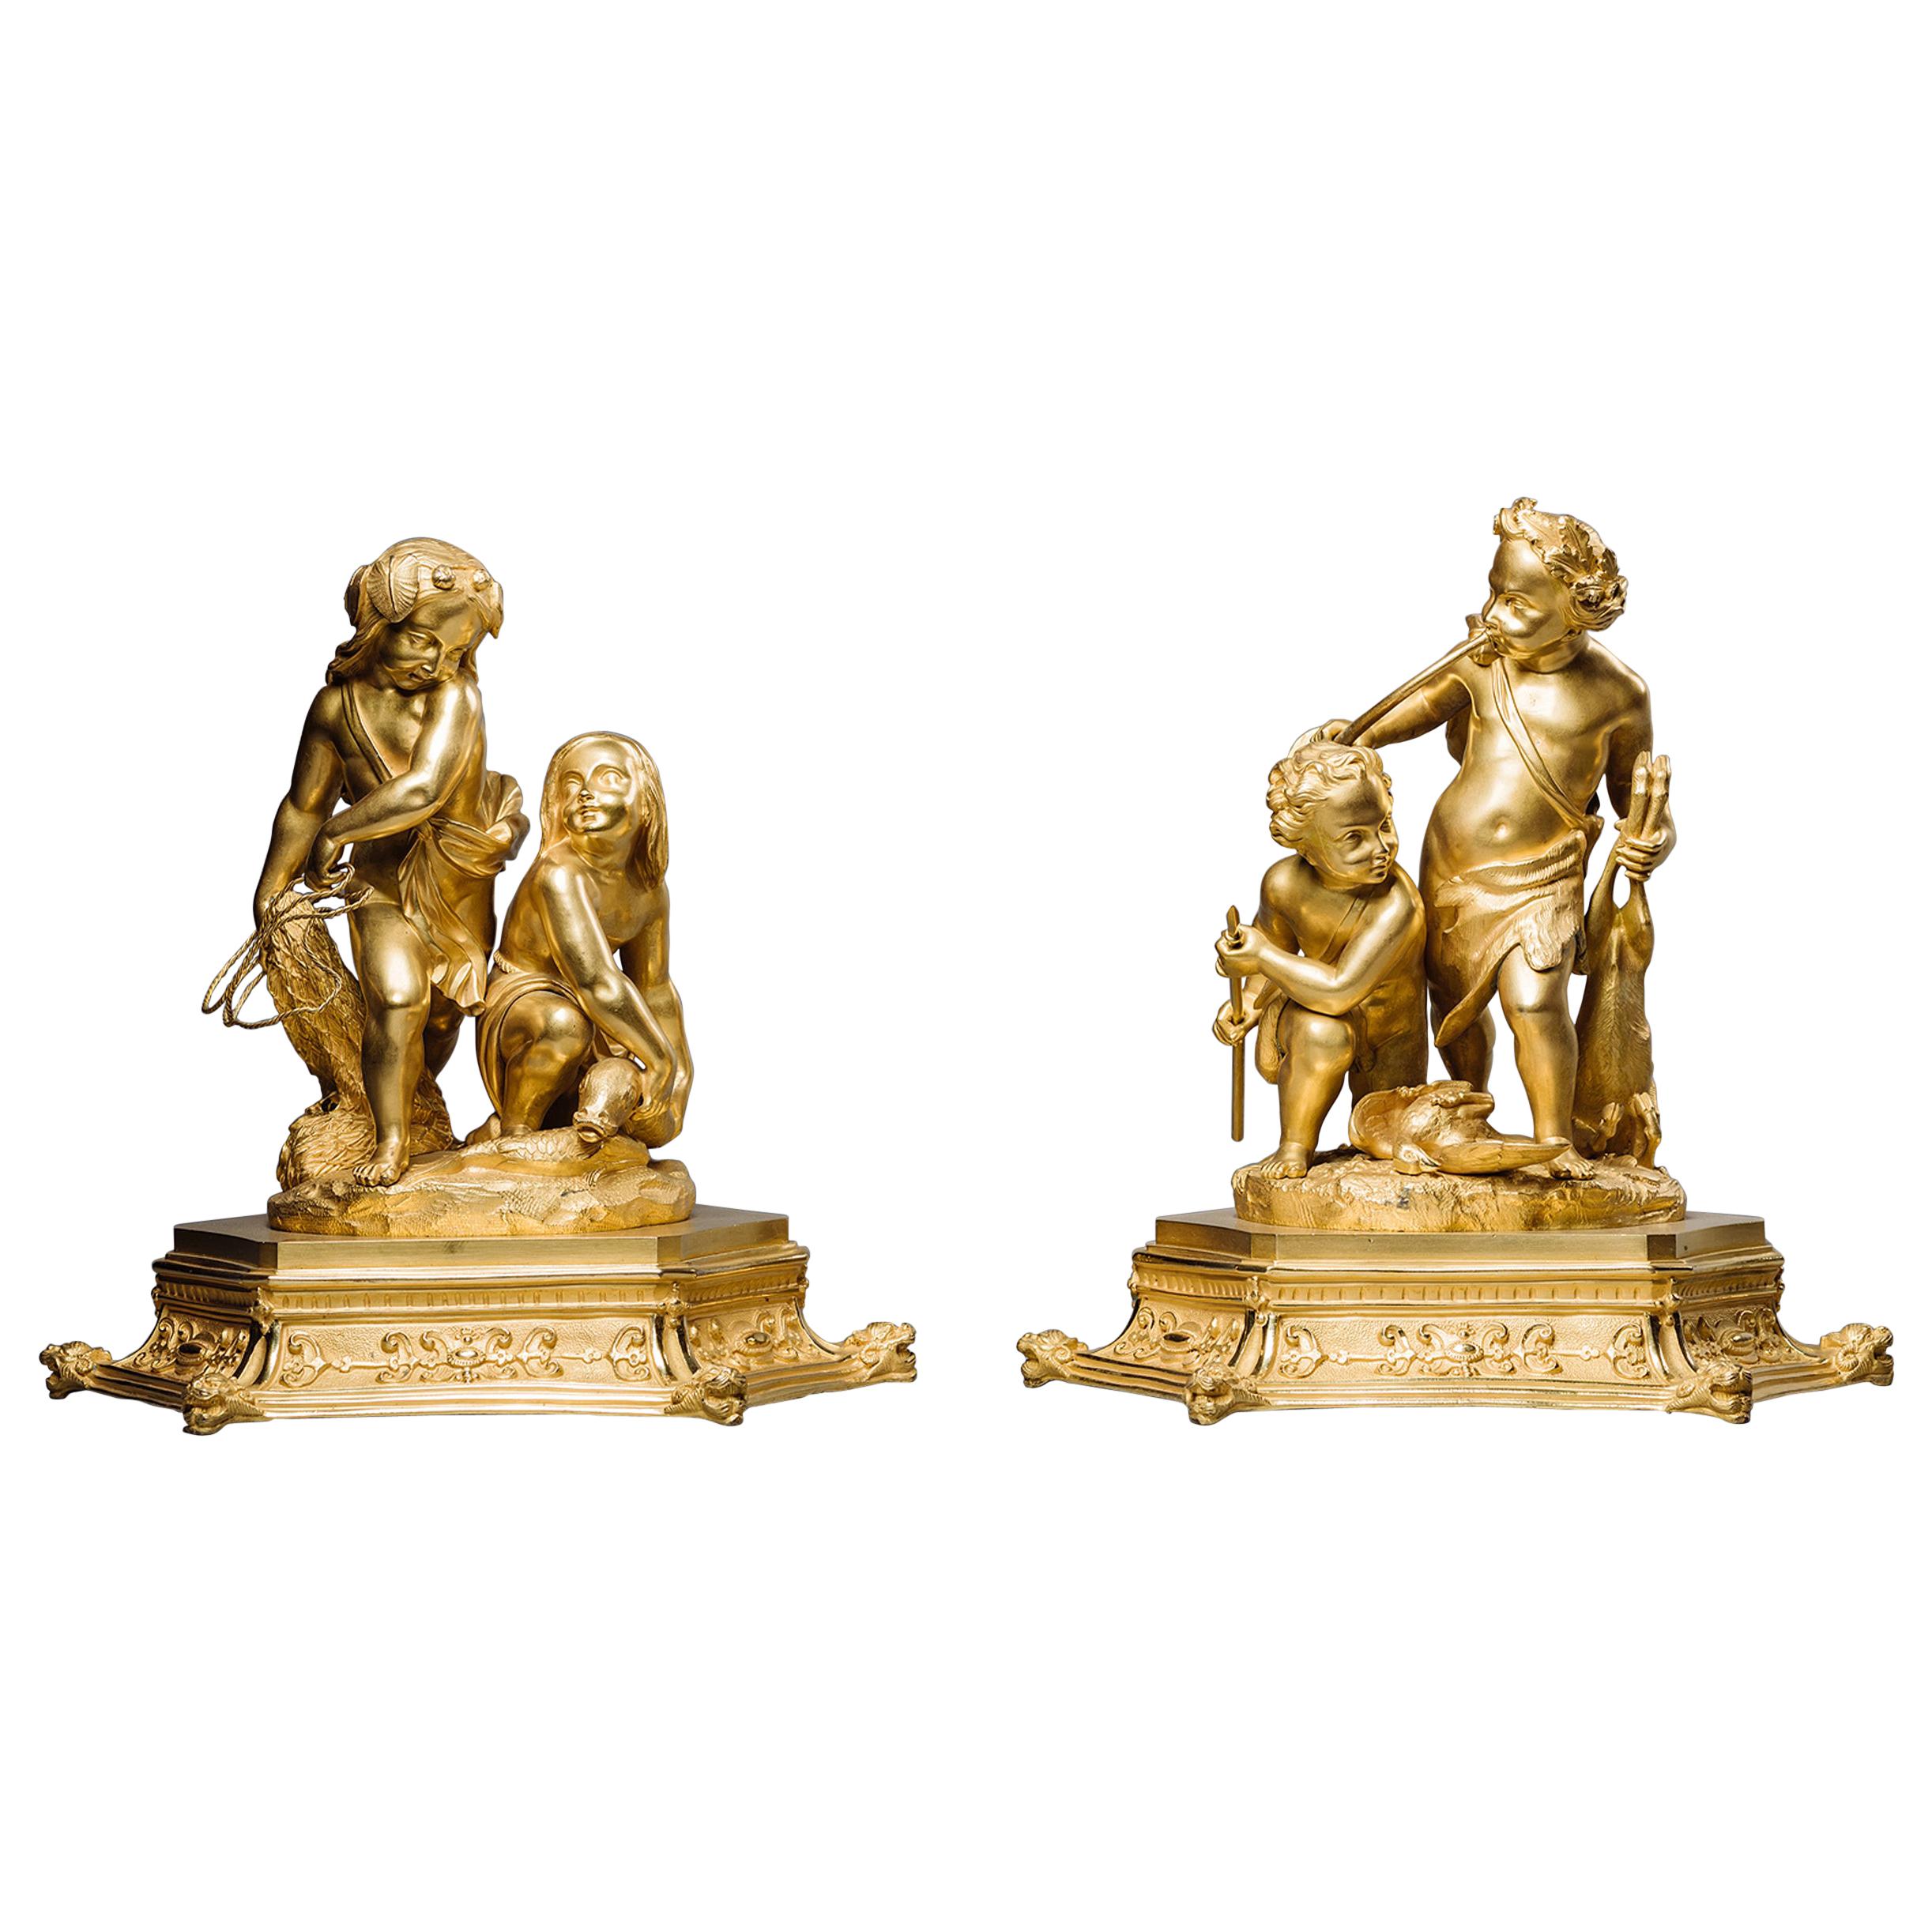 Pair of Restoration Period Gilt-Bronze Figural Groups. French, circa 1830